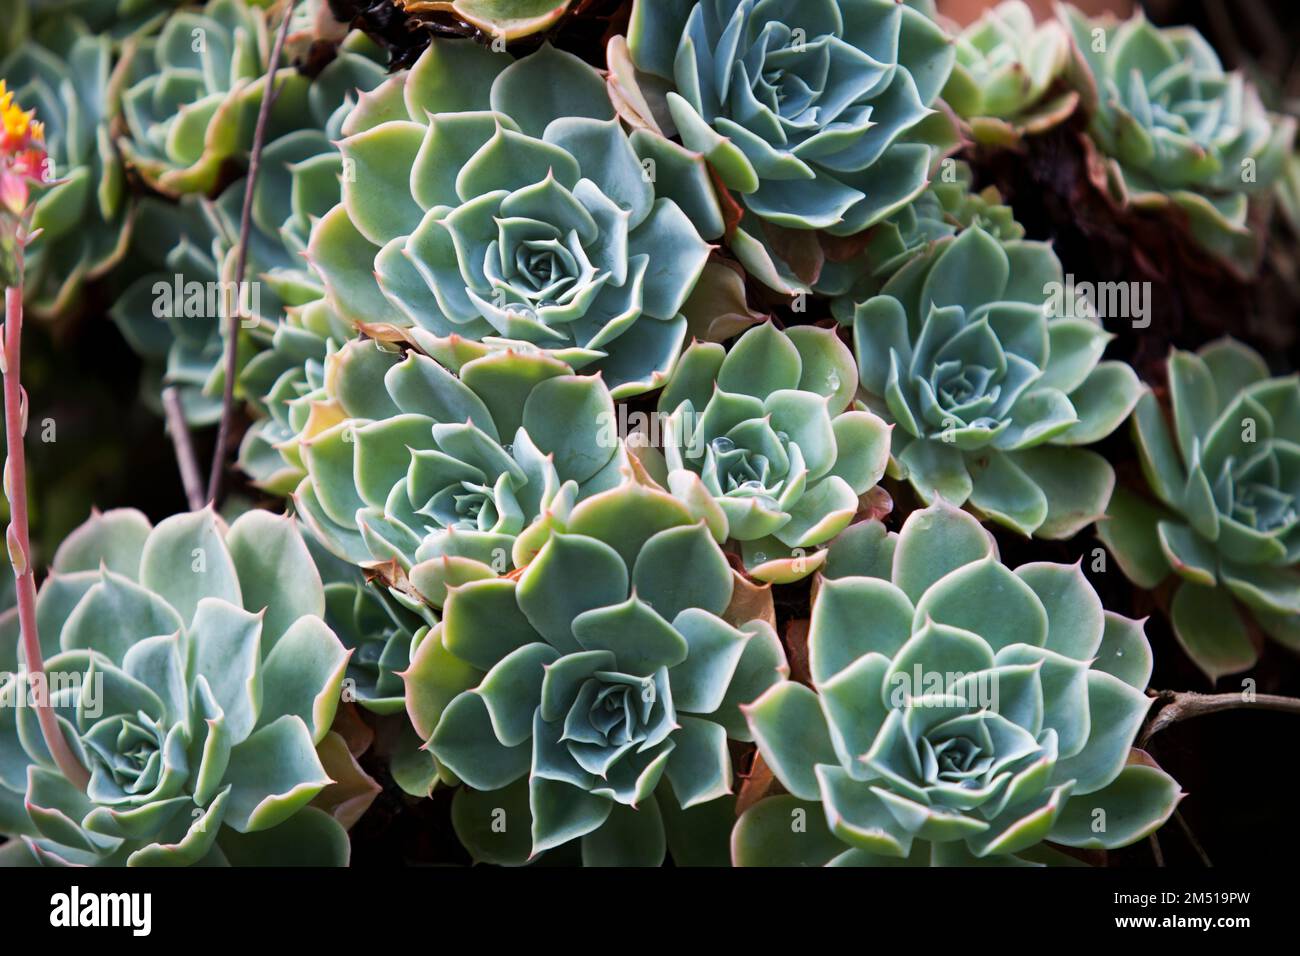 Compact rosettes  of Echeveria, family Crassulaceae. Closeup Stock Photo